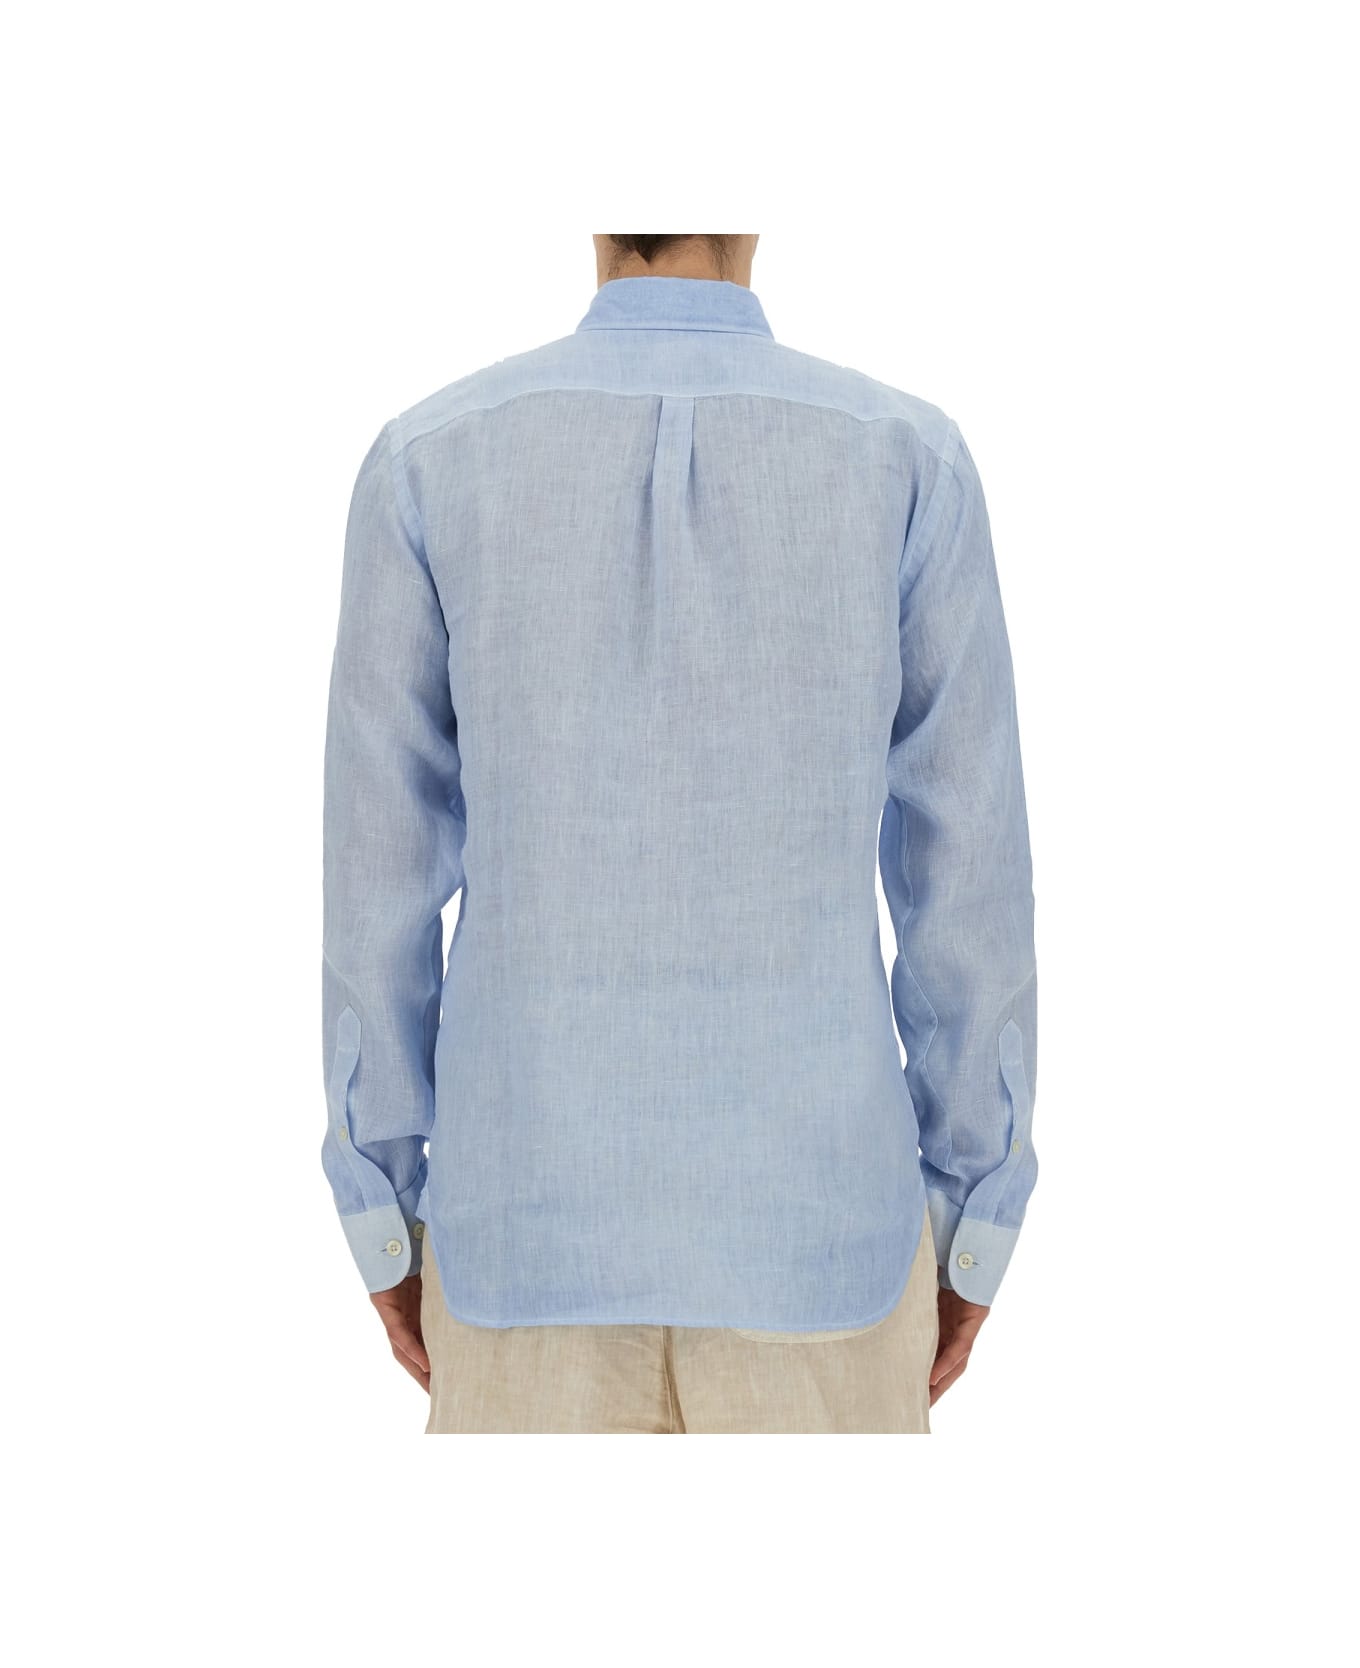 120% Lino Regular Fit Shirt - BABY BLUE